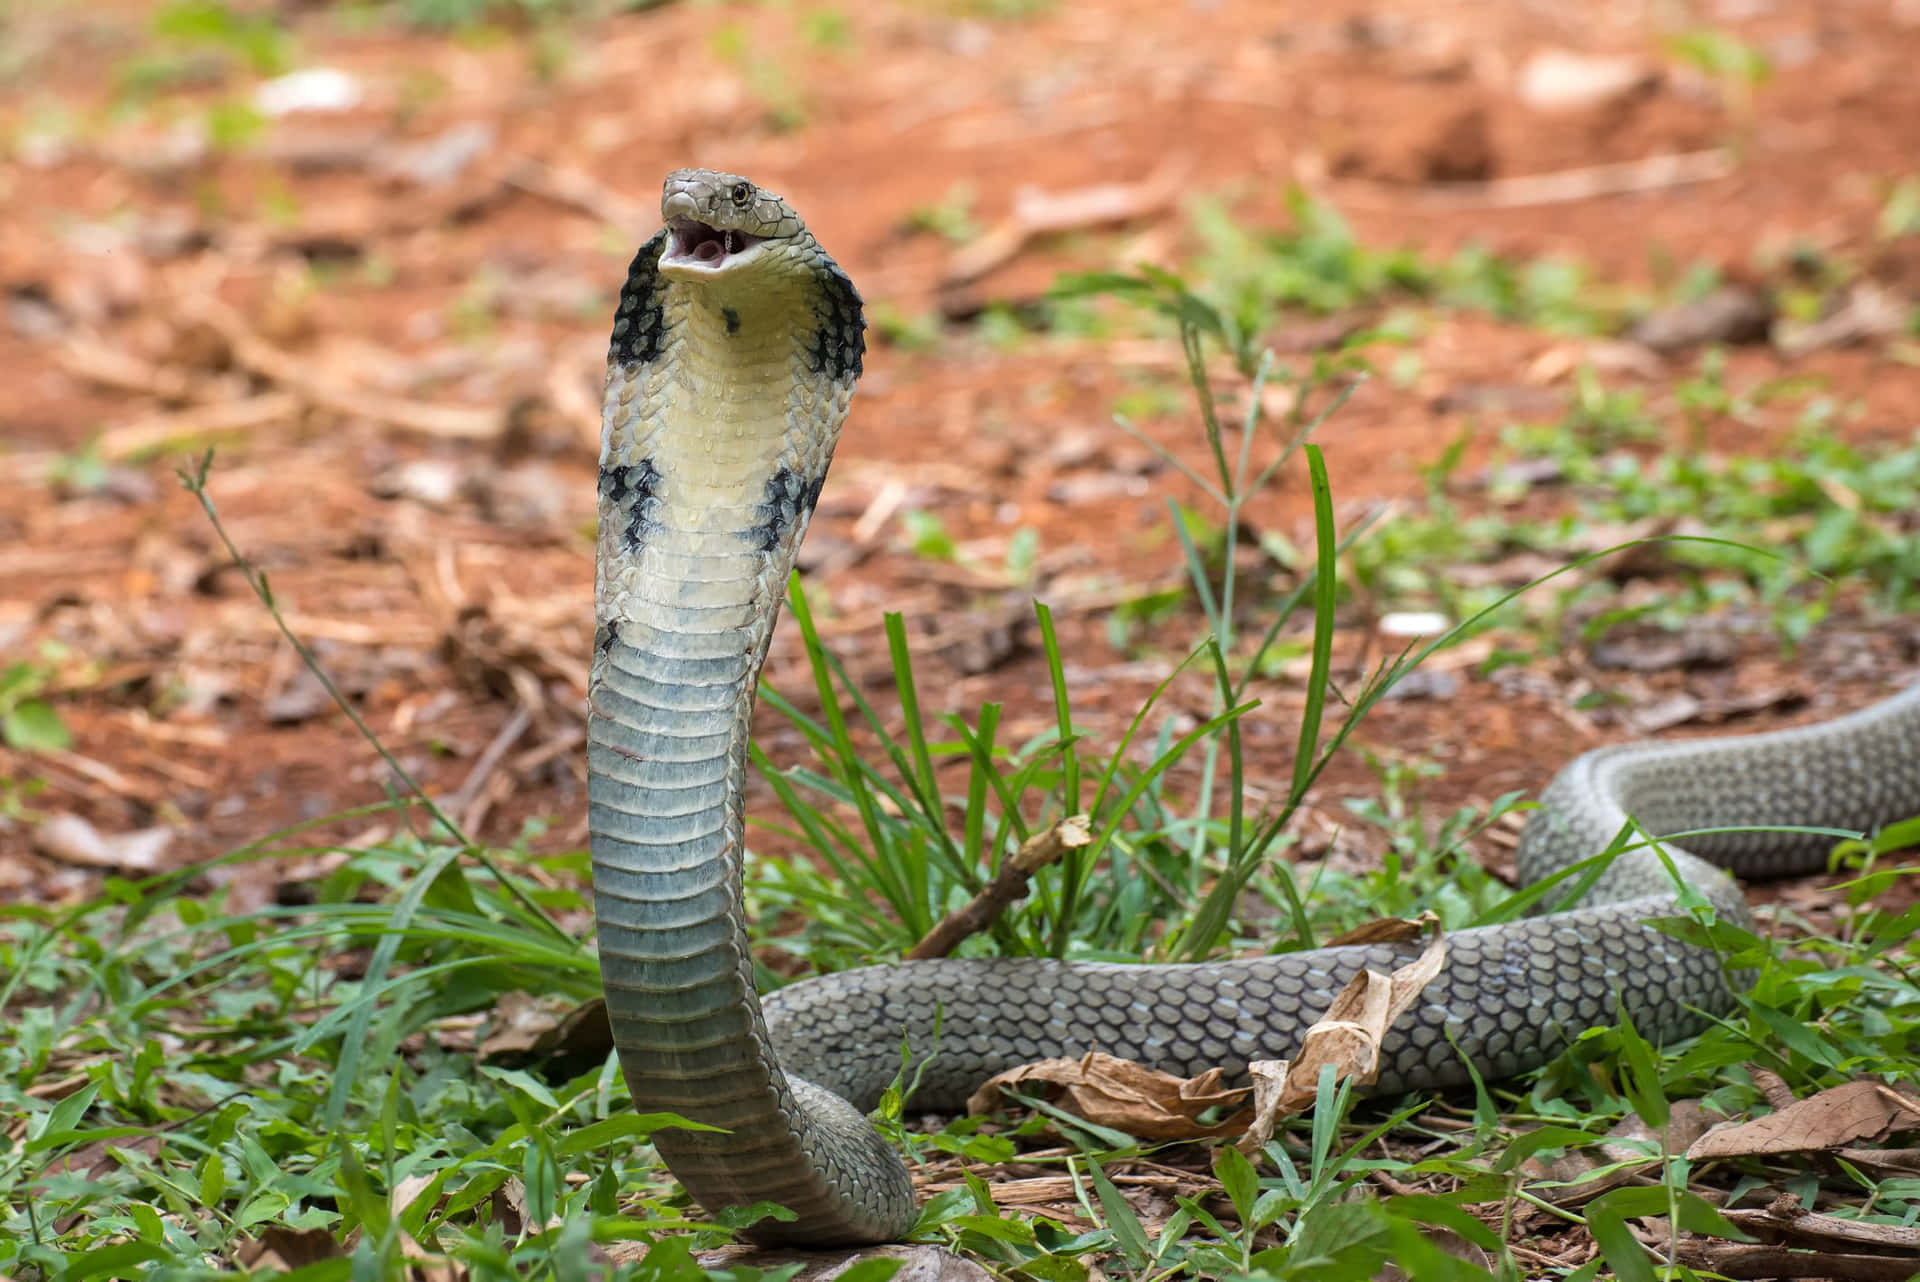 Majestic King Cobra In Its Natural Habitat